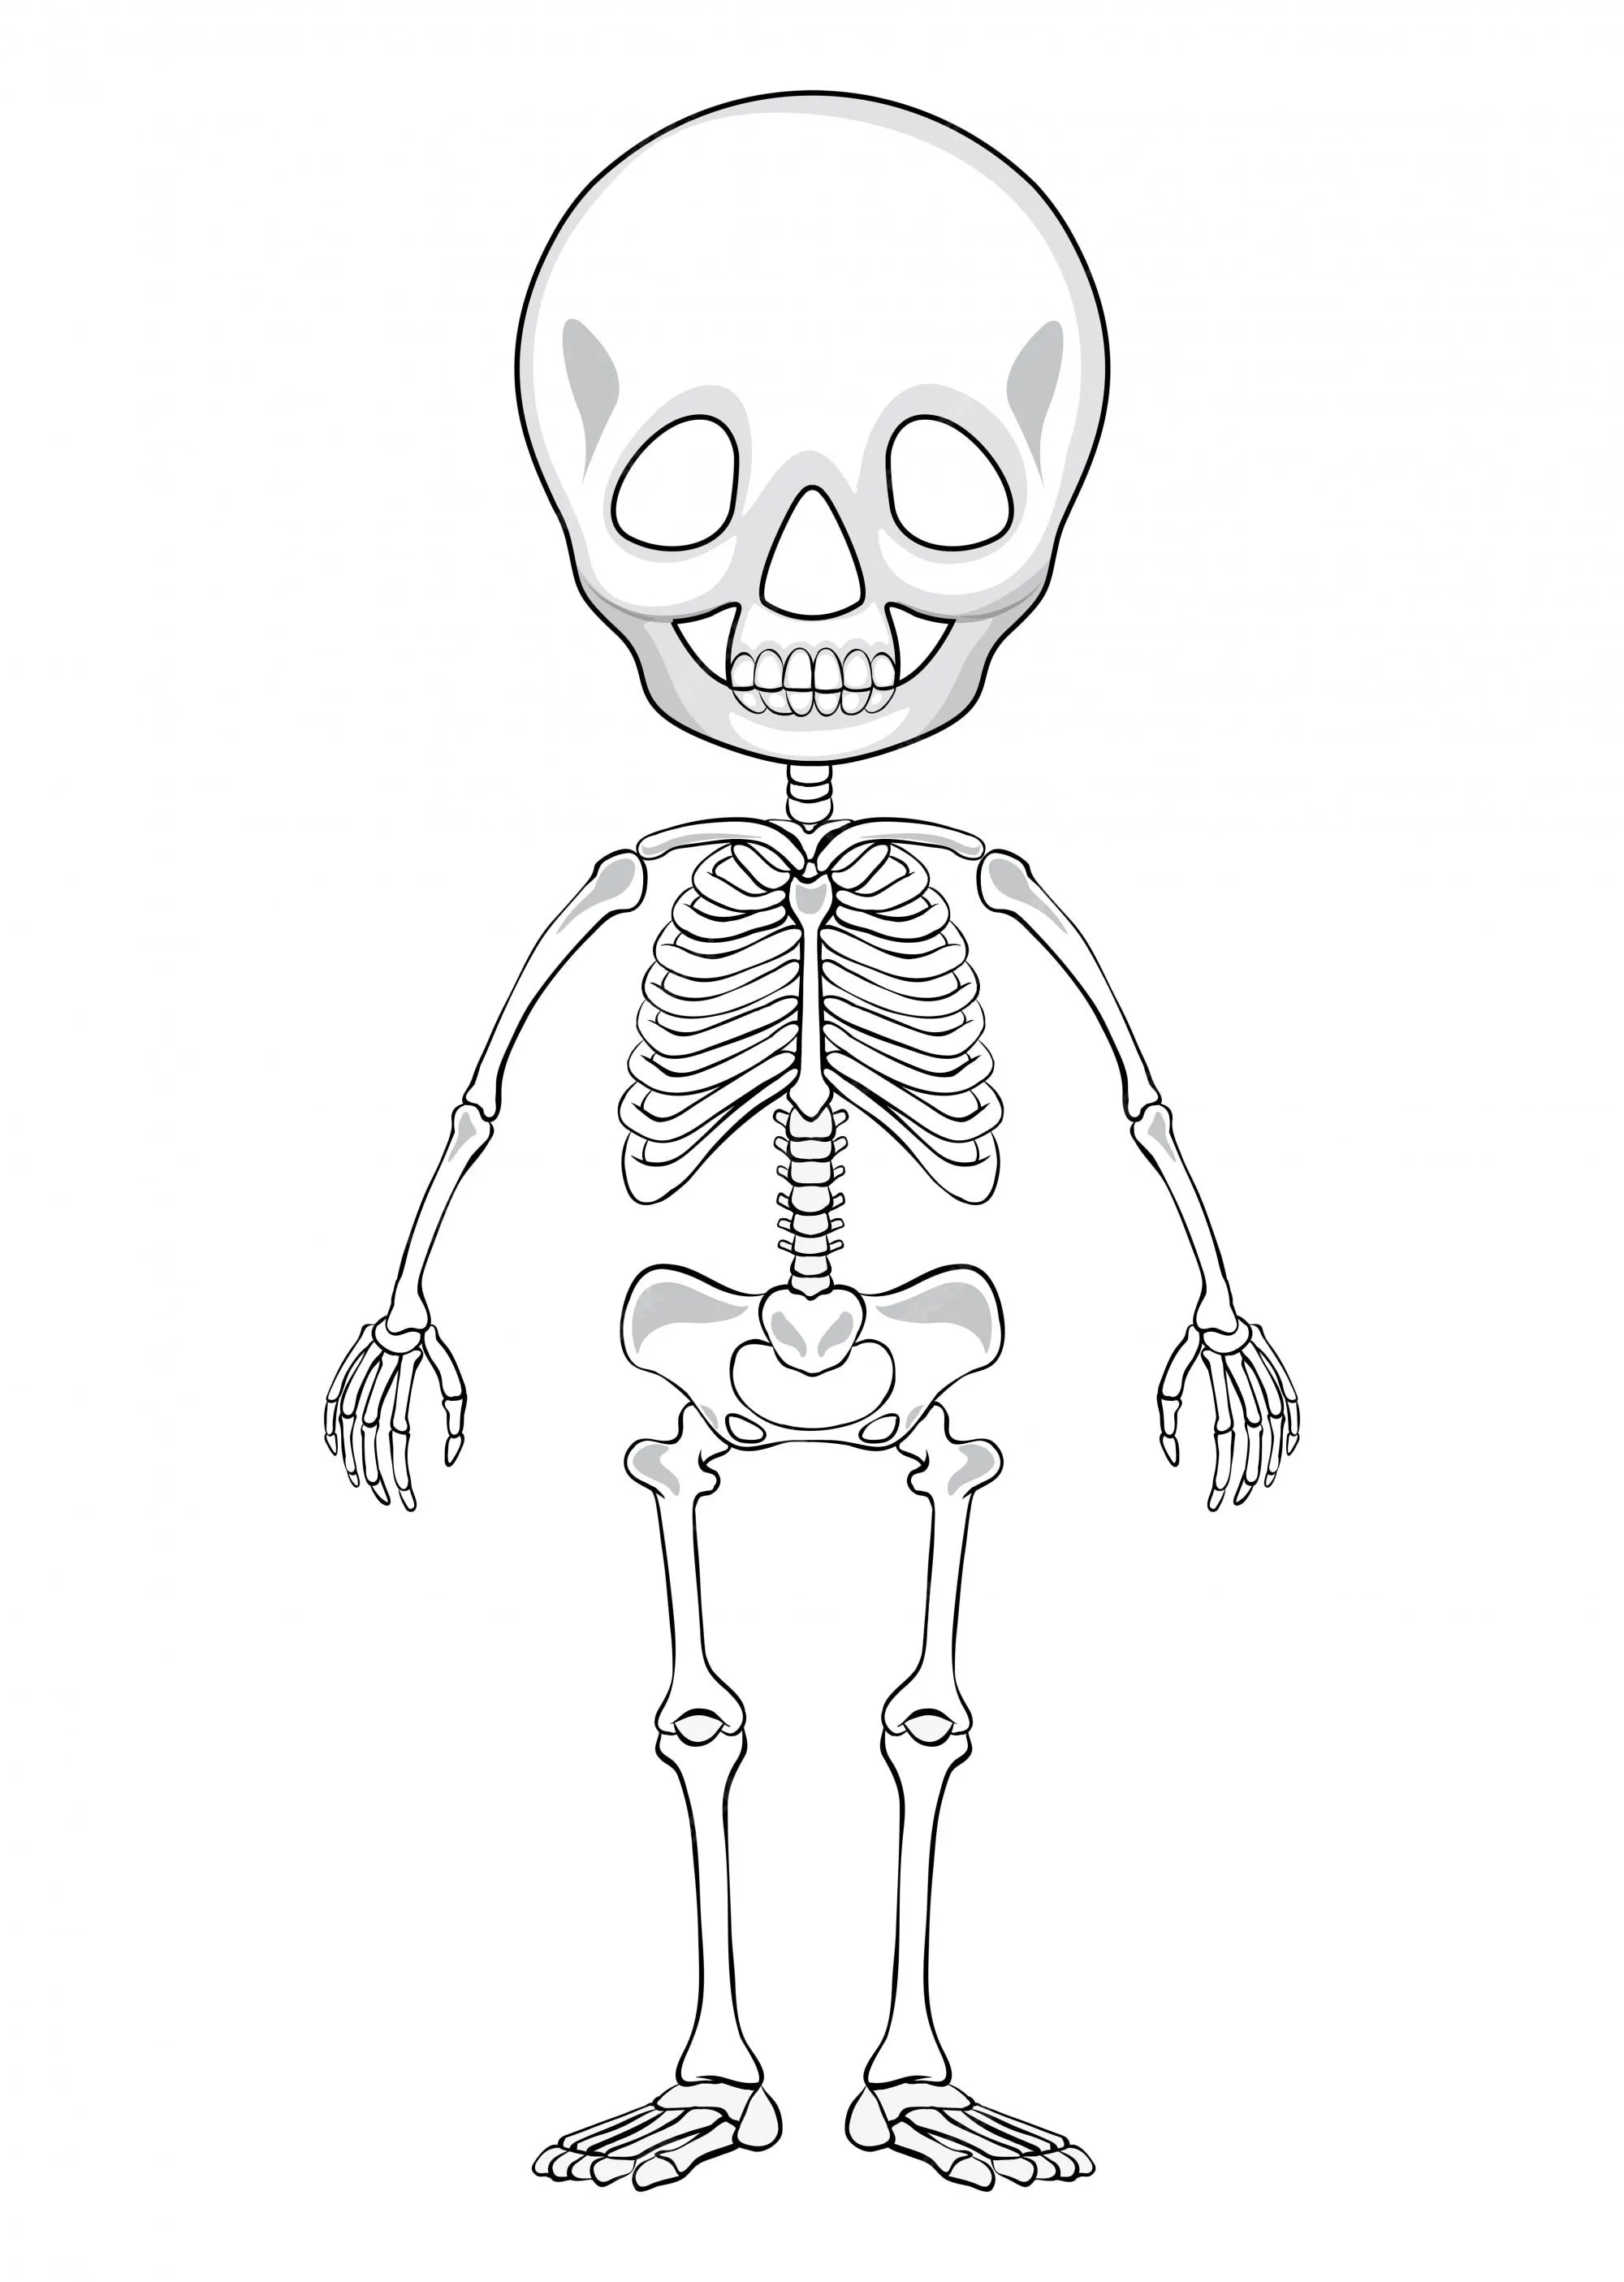 Vectores e ilustraciones de Huesos humanos colorear para descargar gratis |  Freepik